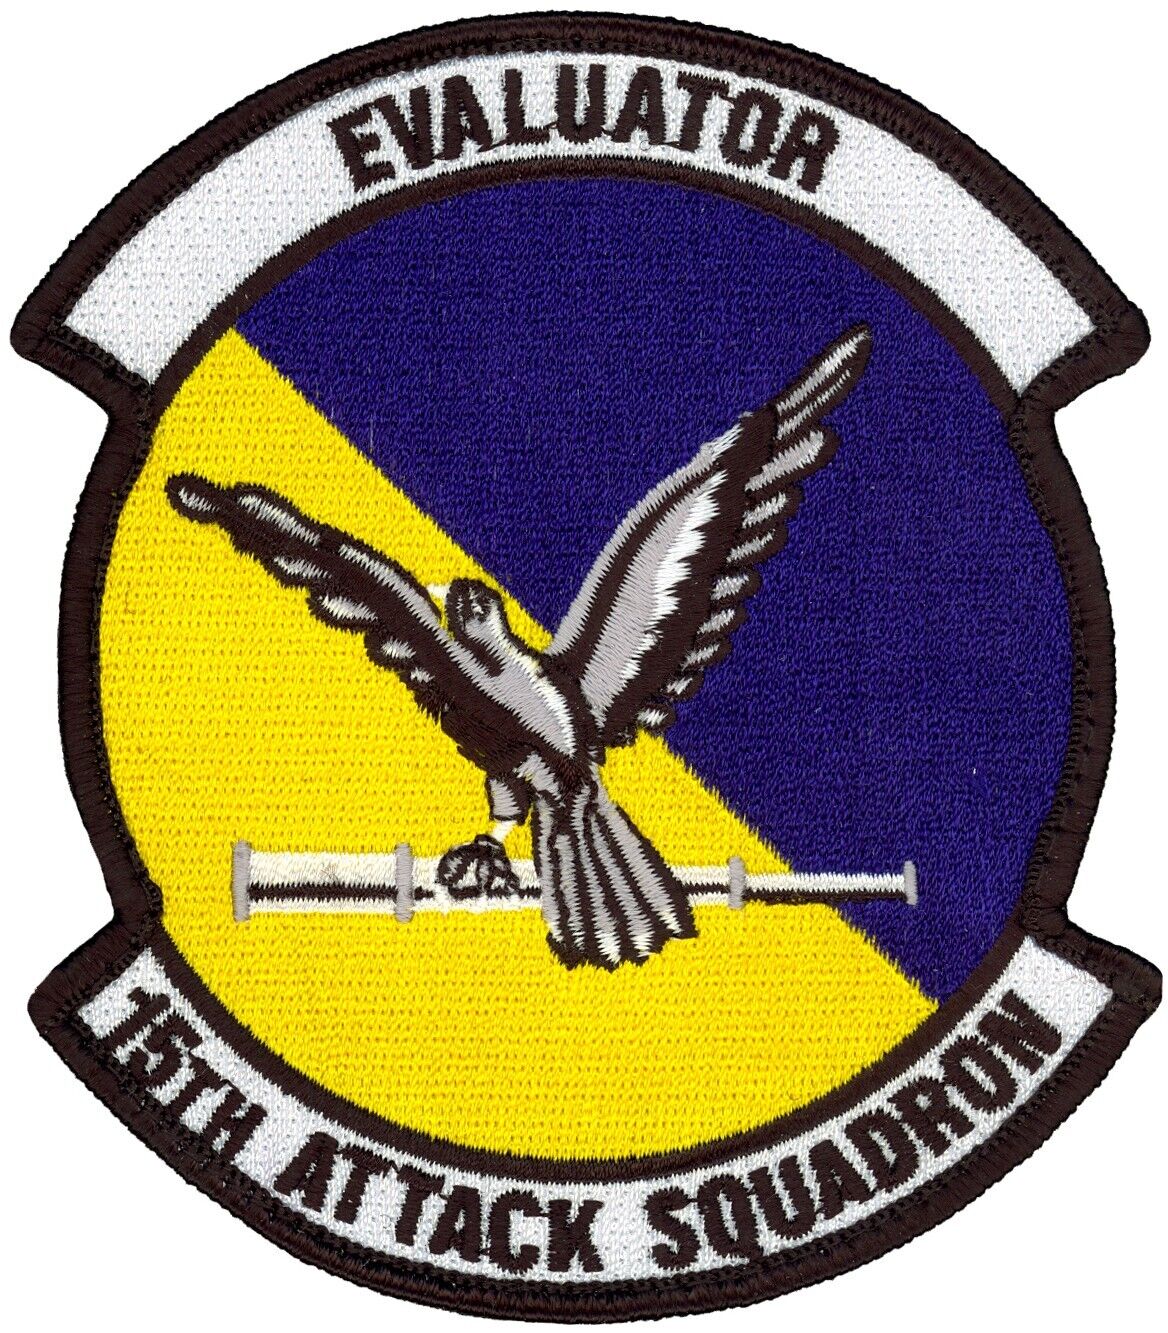 USAF 15th ATTACK SQUADRON EVALUATOR PATCH